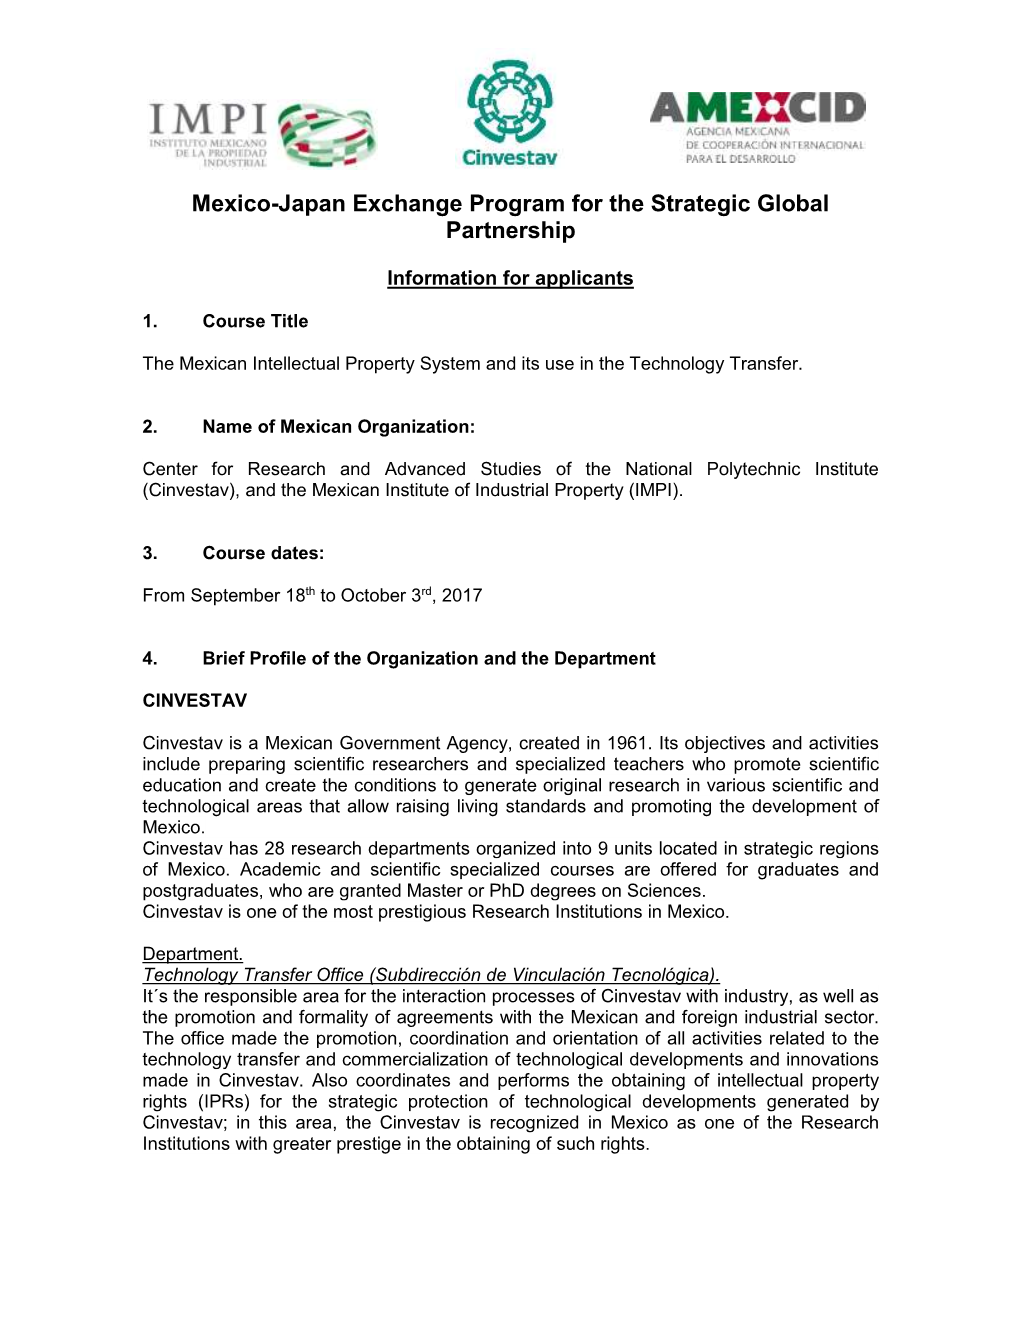 Mexico-Japan Exchange Program for the Strategic Global Partnership